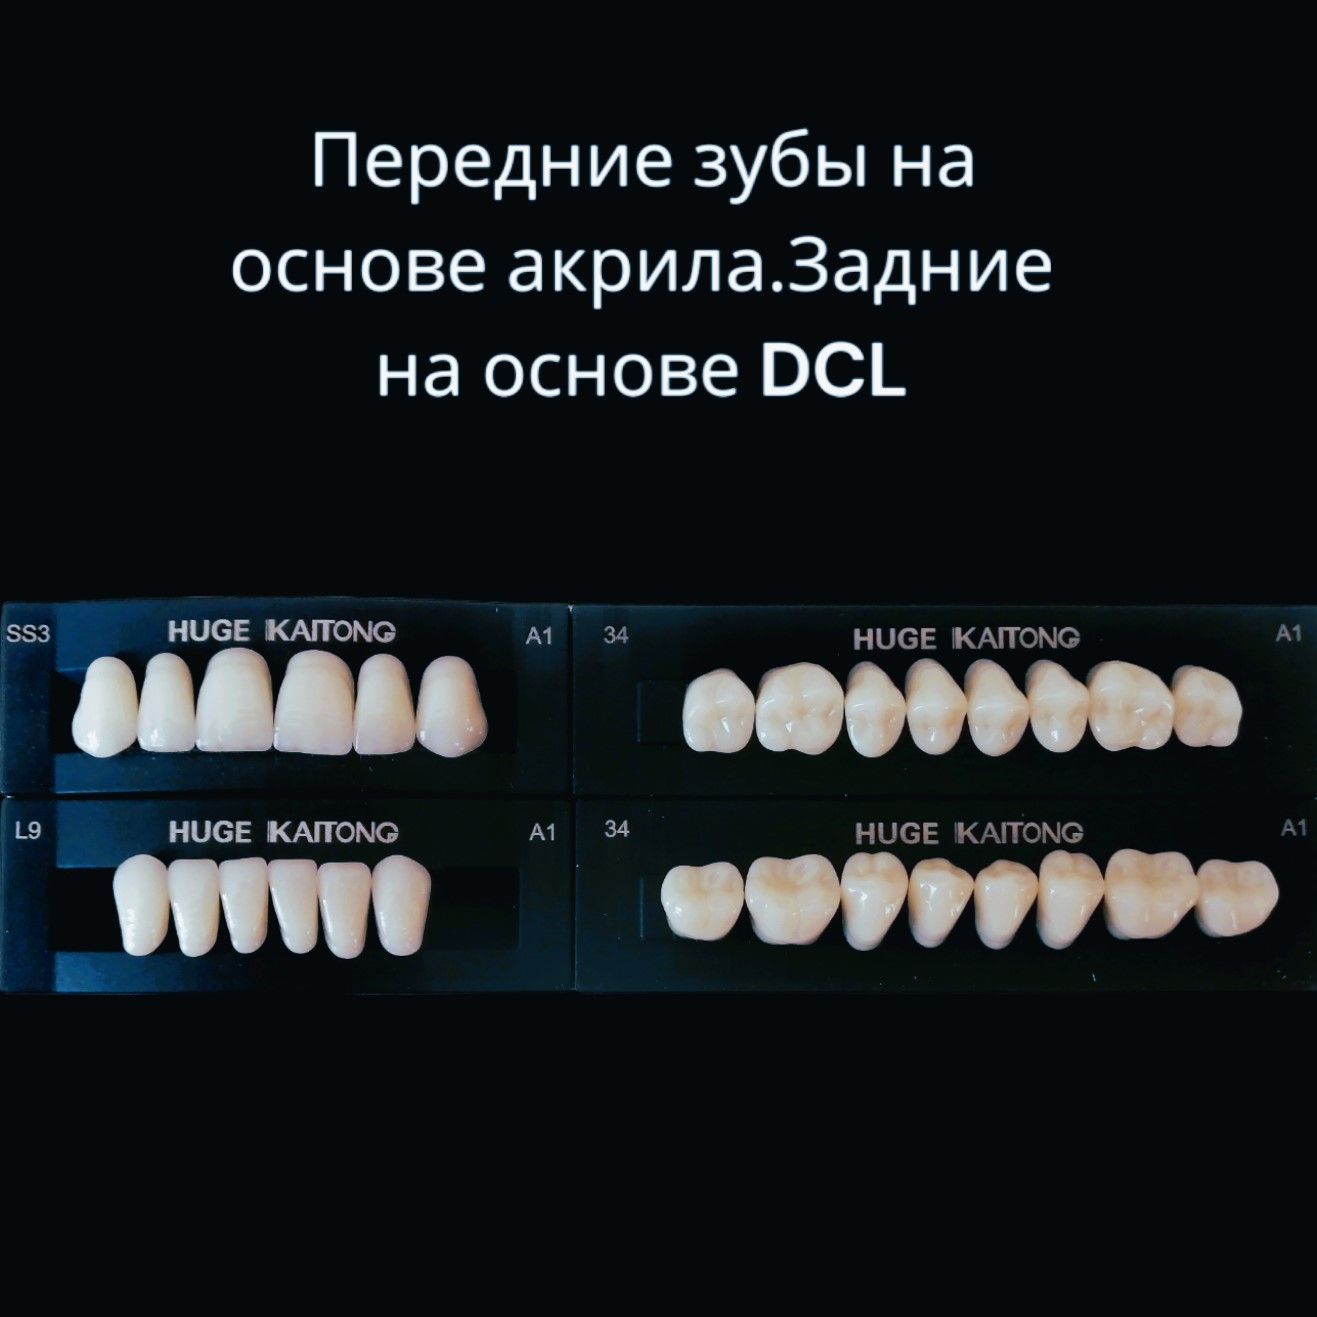 Зубыакриловые2-хслойныеА1SS3Kaitong(1гарнитур,28зубов)HUGEDENTAL